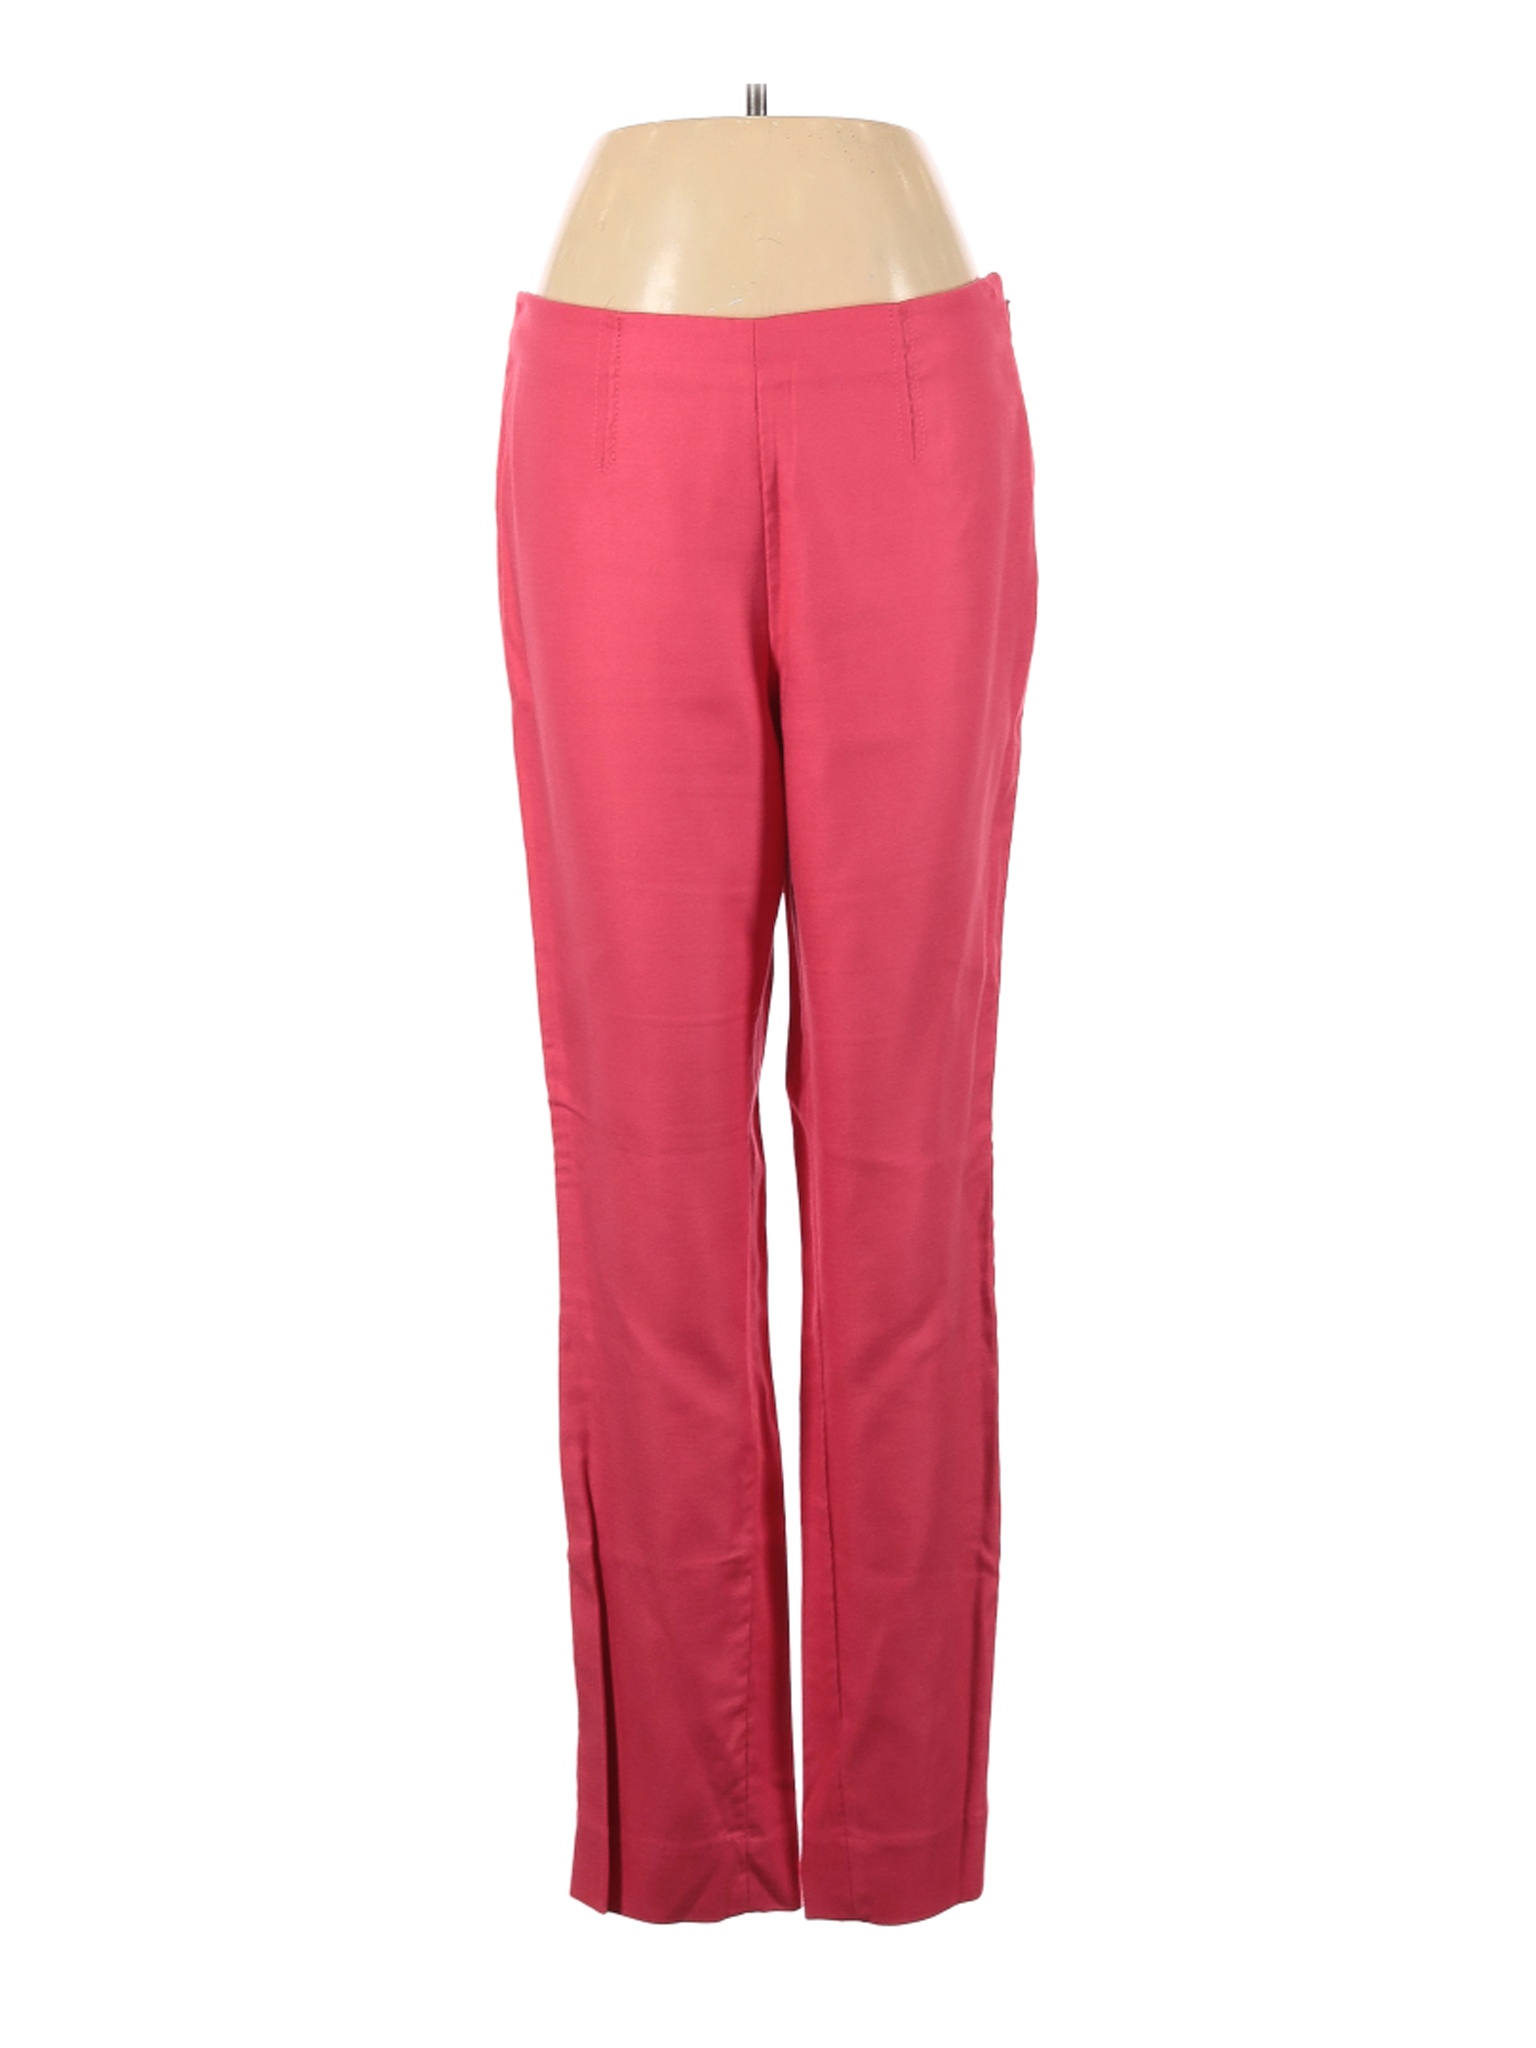 Banana Republic Women Pink Casual Pants 8 | eBay